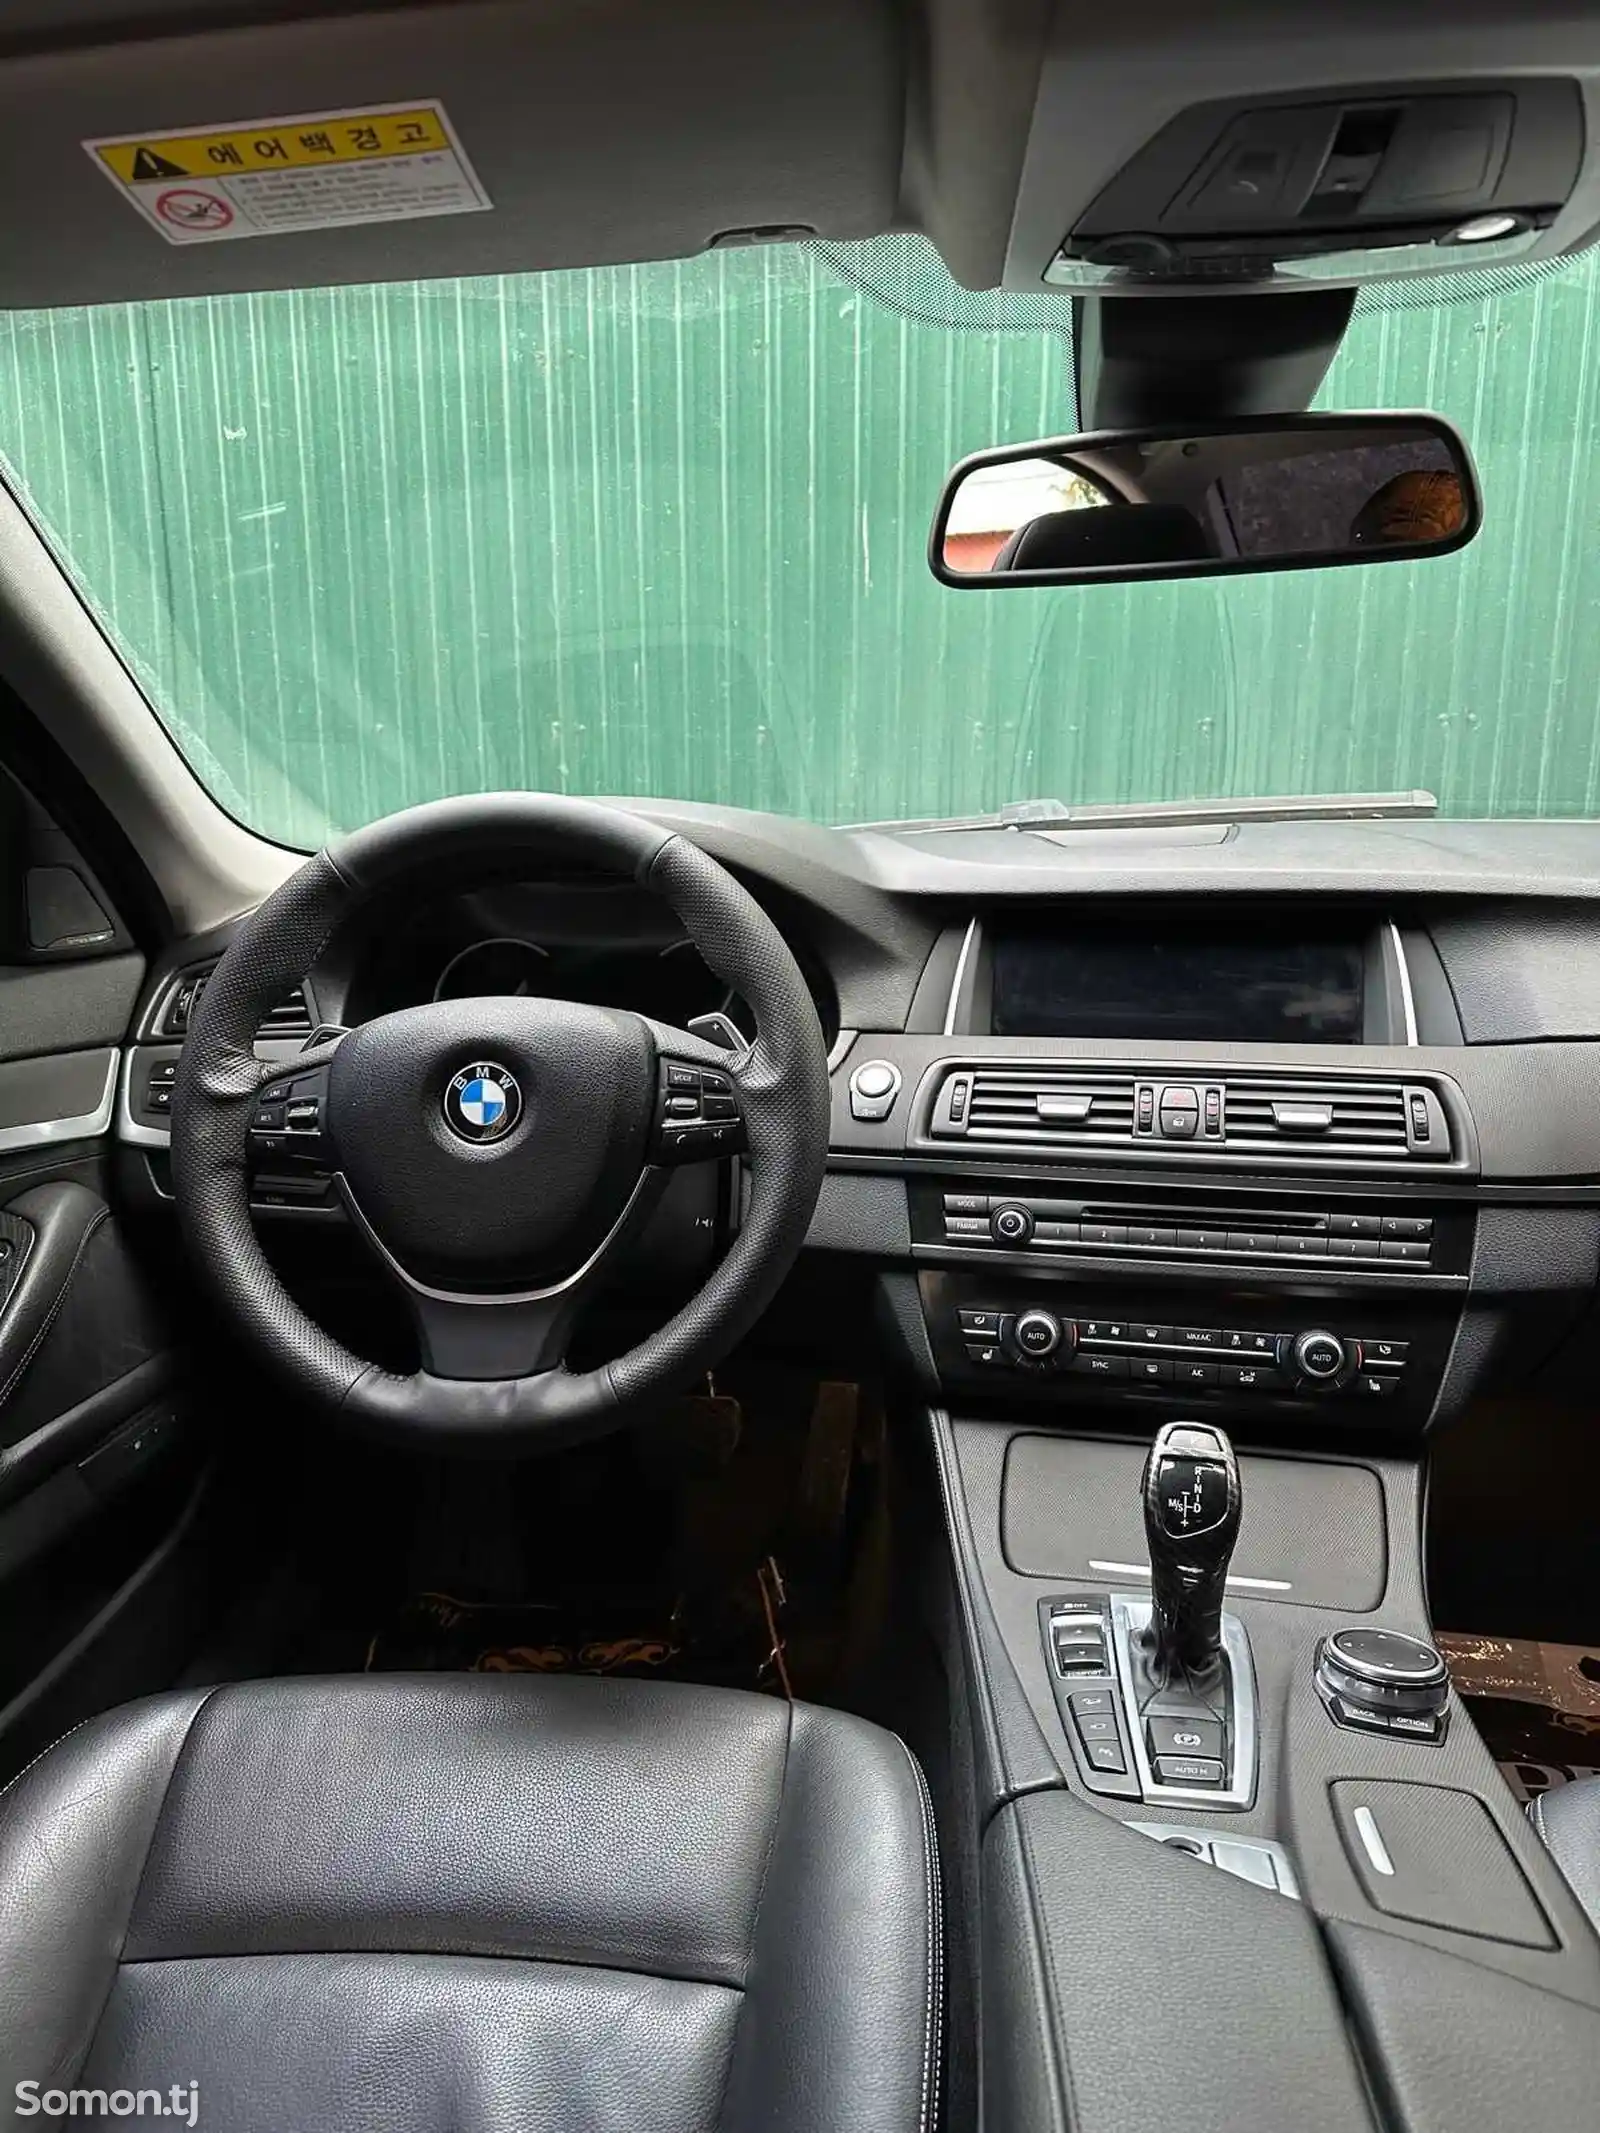 BMW 5 series, 2015-8